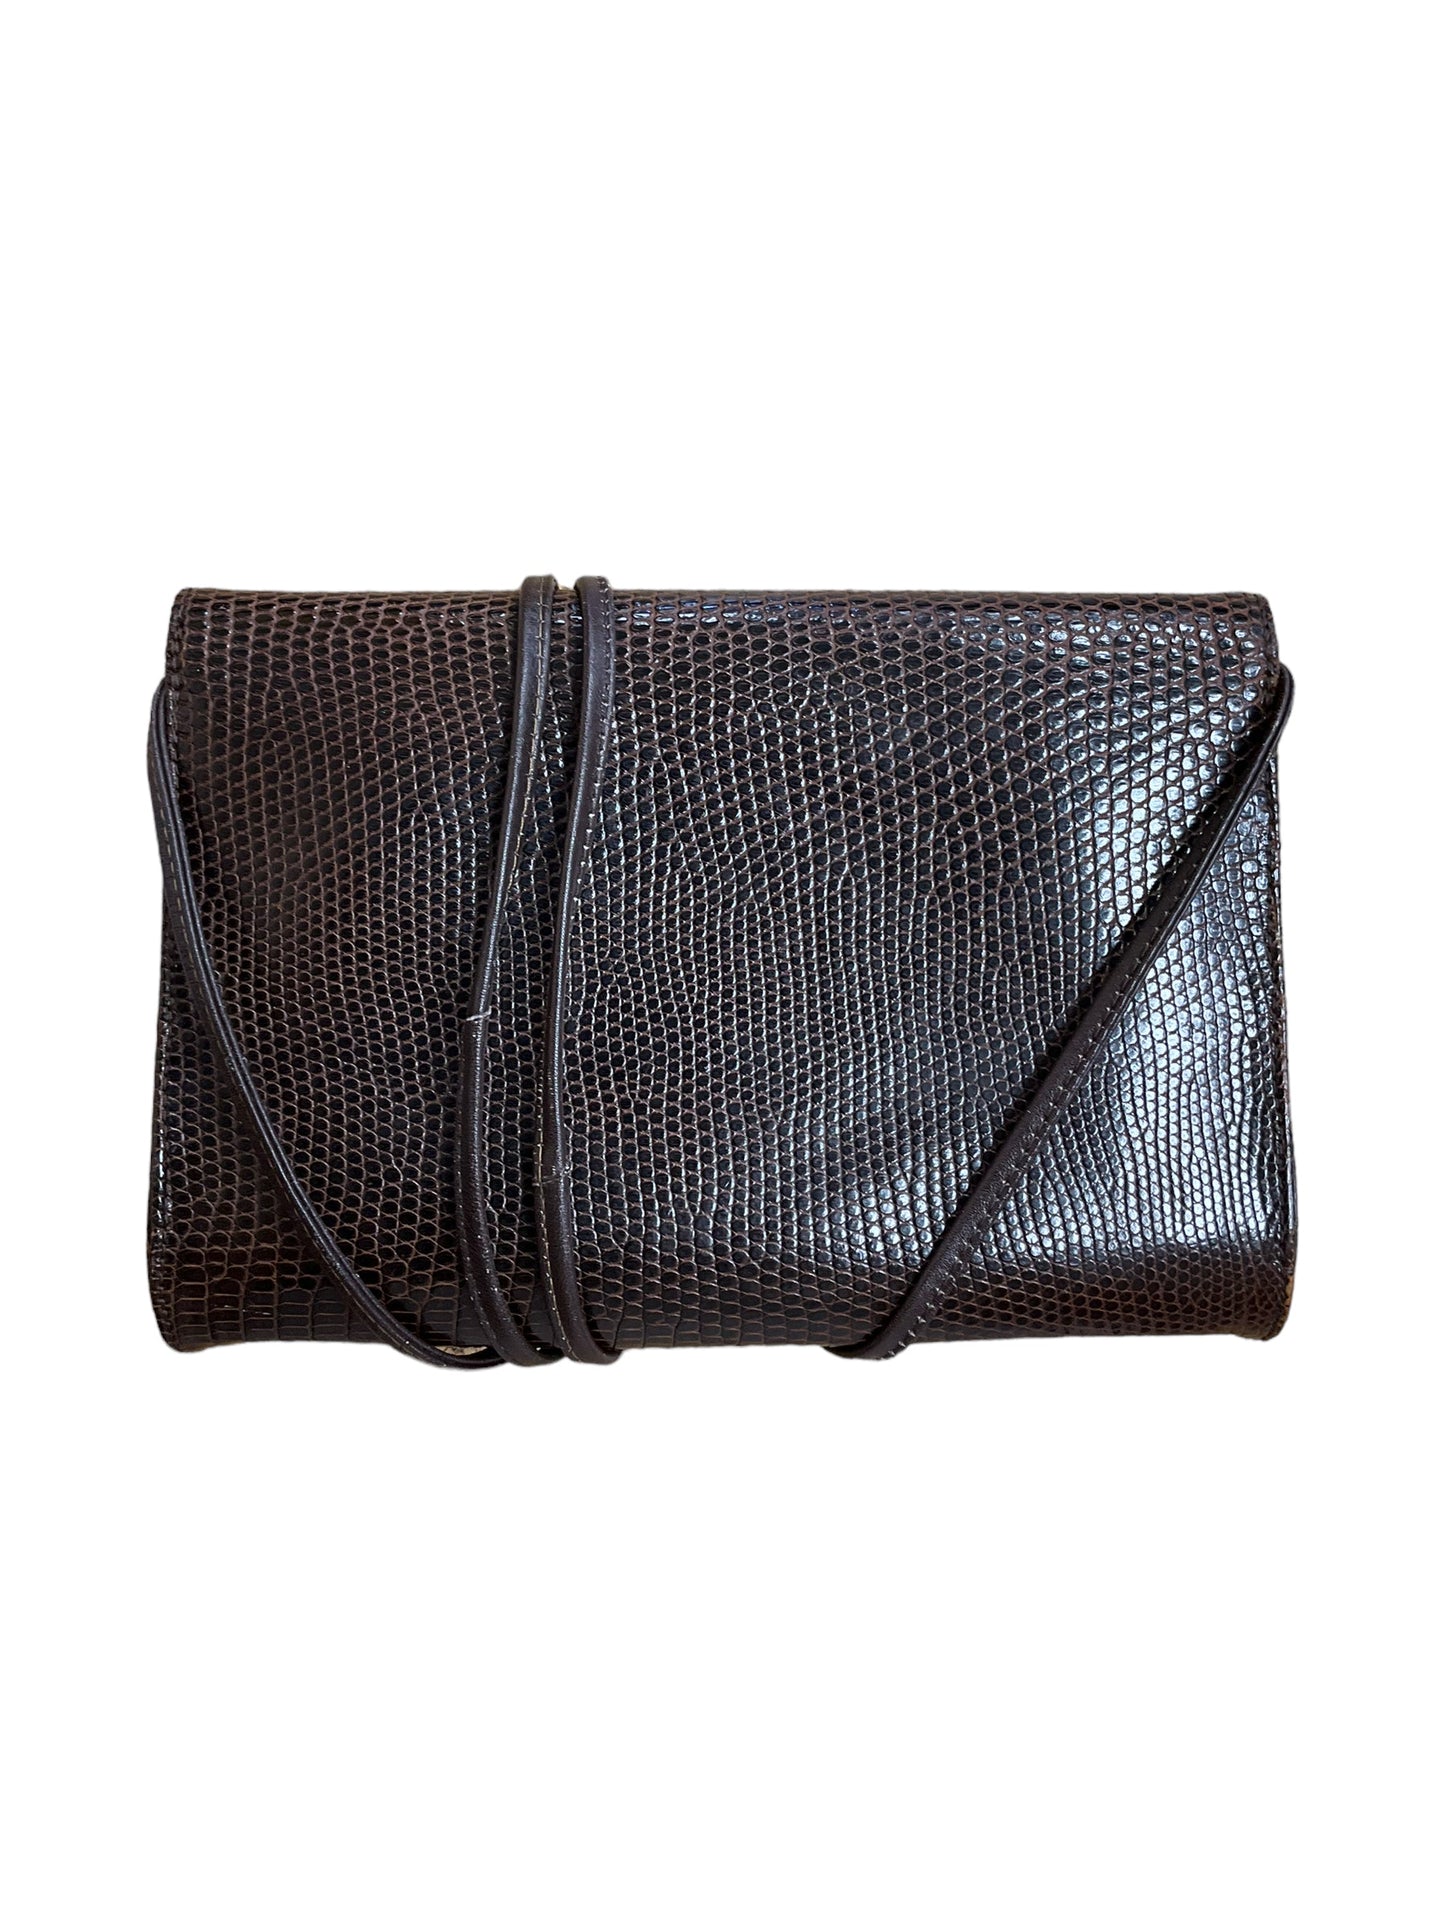 Handbag Luxury Designer By Givenchy  Size: Small